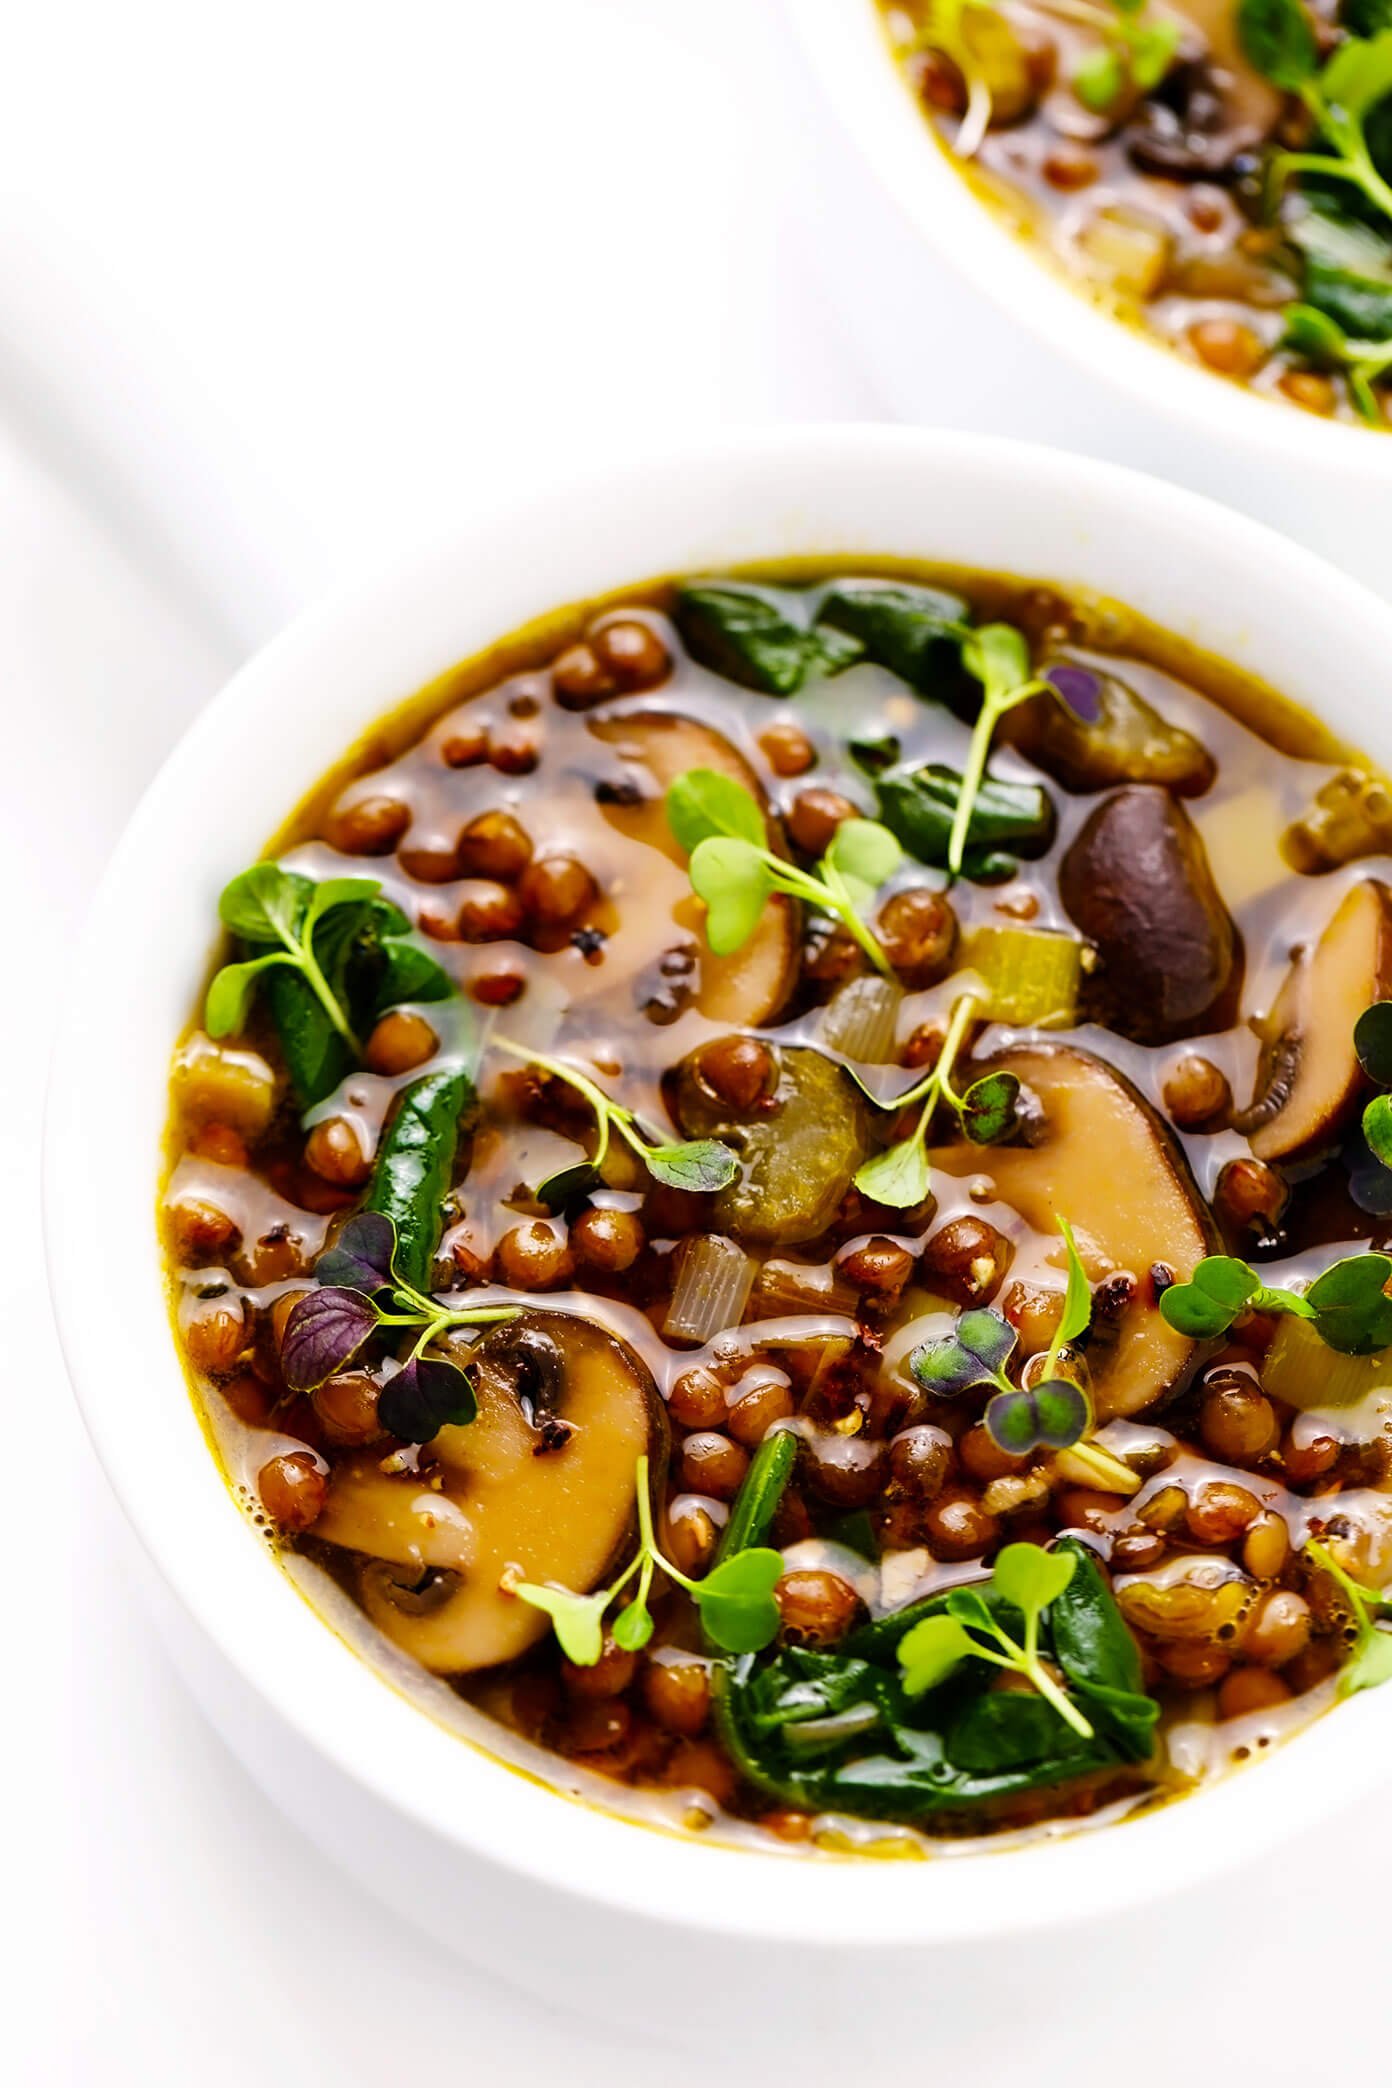 French Lentil and Mushroom Soup